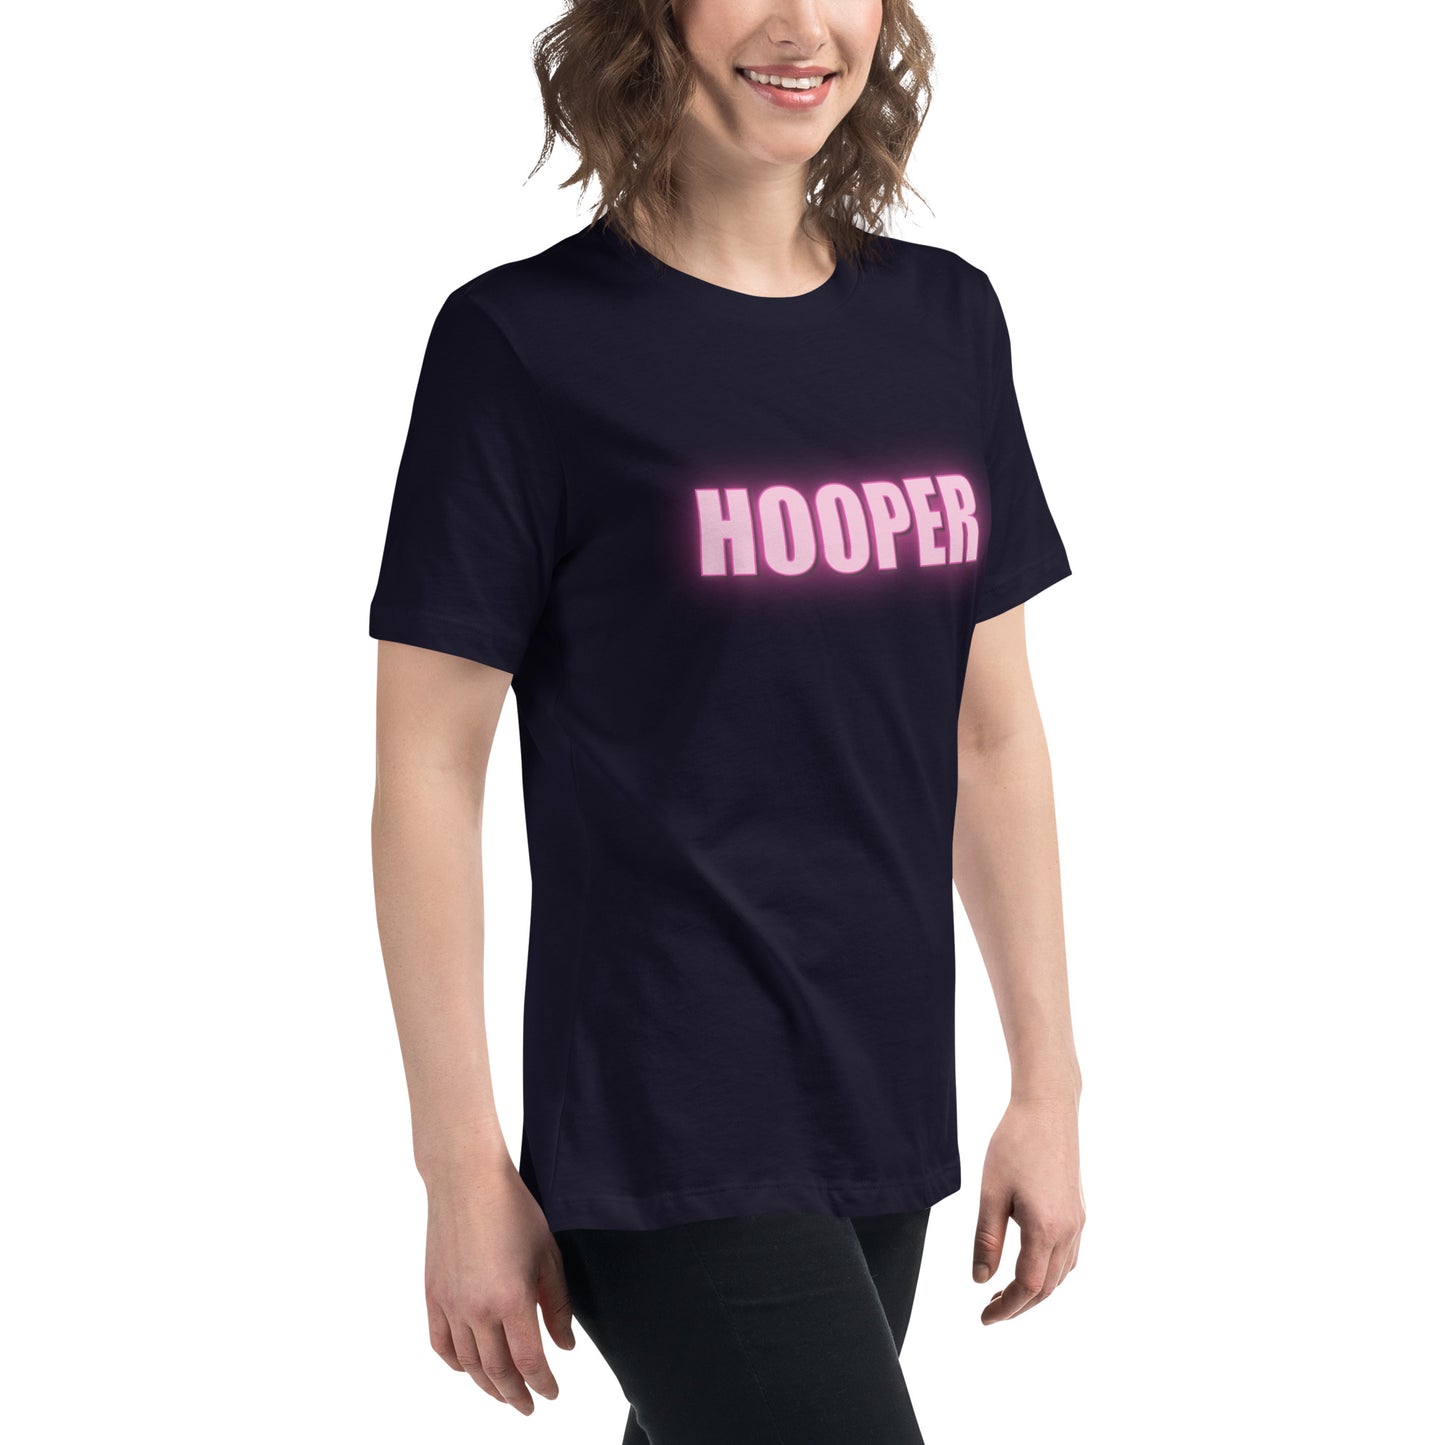 Hooper Pink Women's Relaxed T-Shirt - Soft, Relaxed Fit for Women